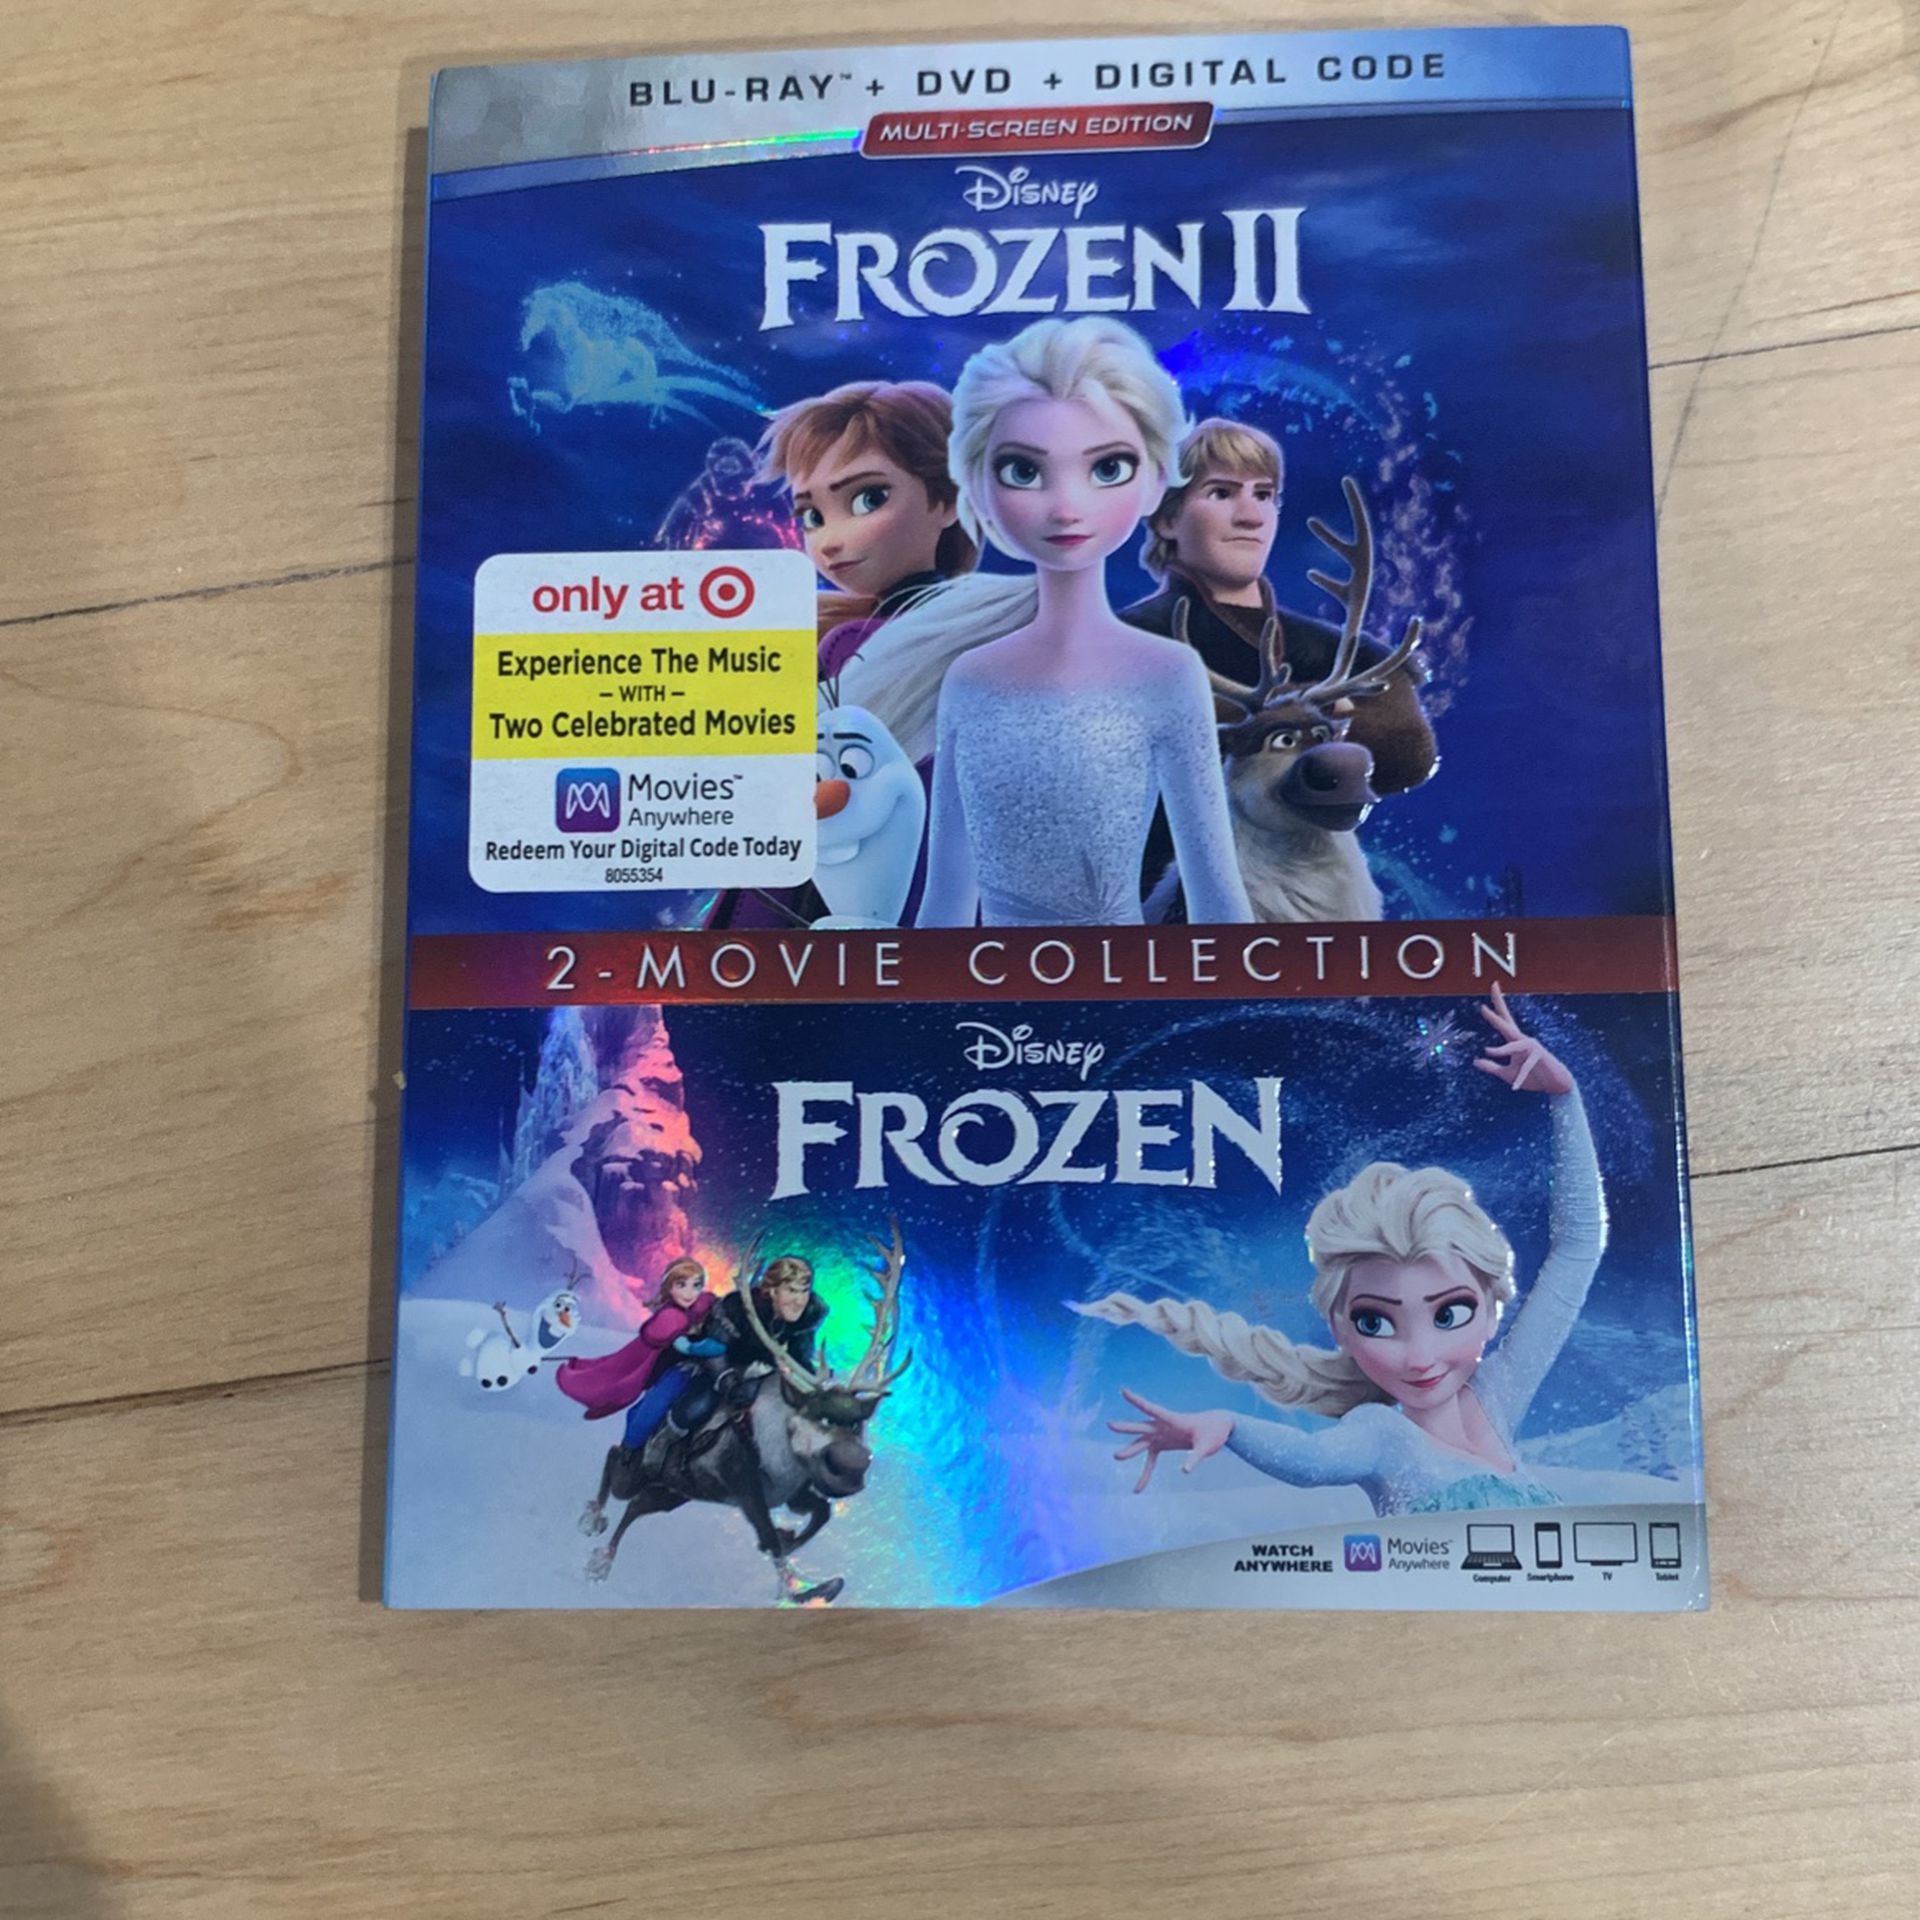 Frozen 2 Movie Collection Blu-ray +DVD+Digital Code